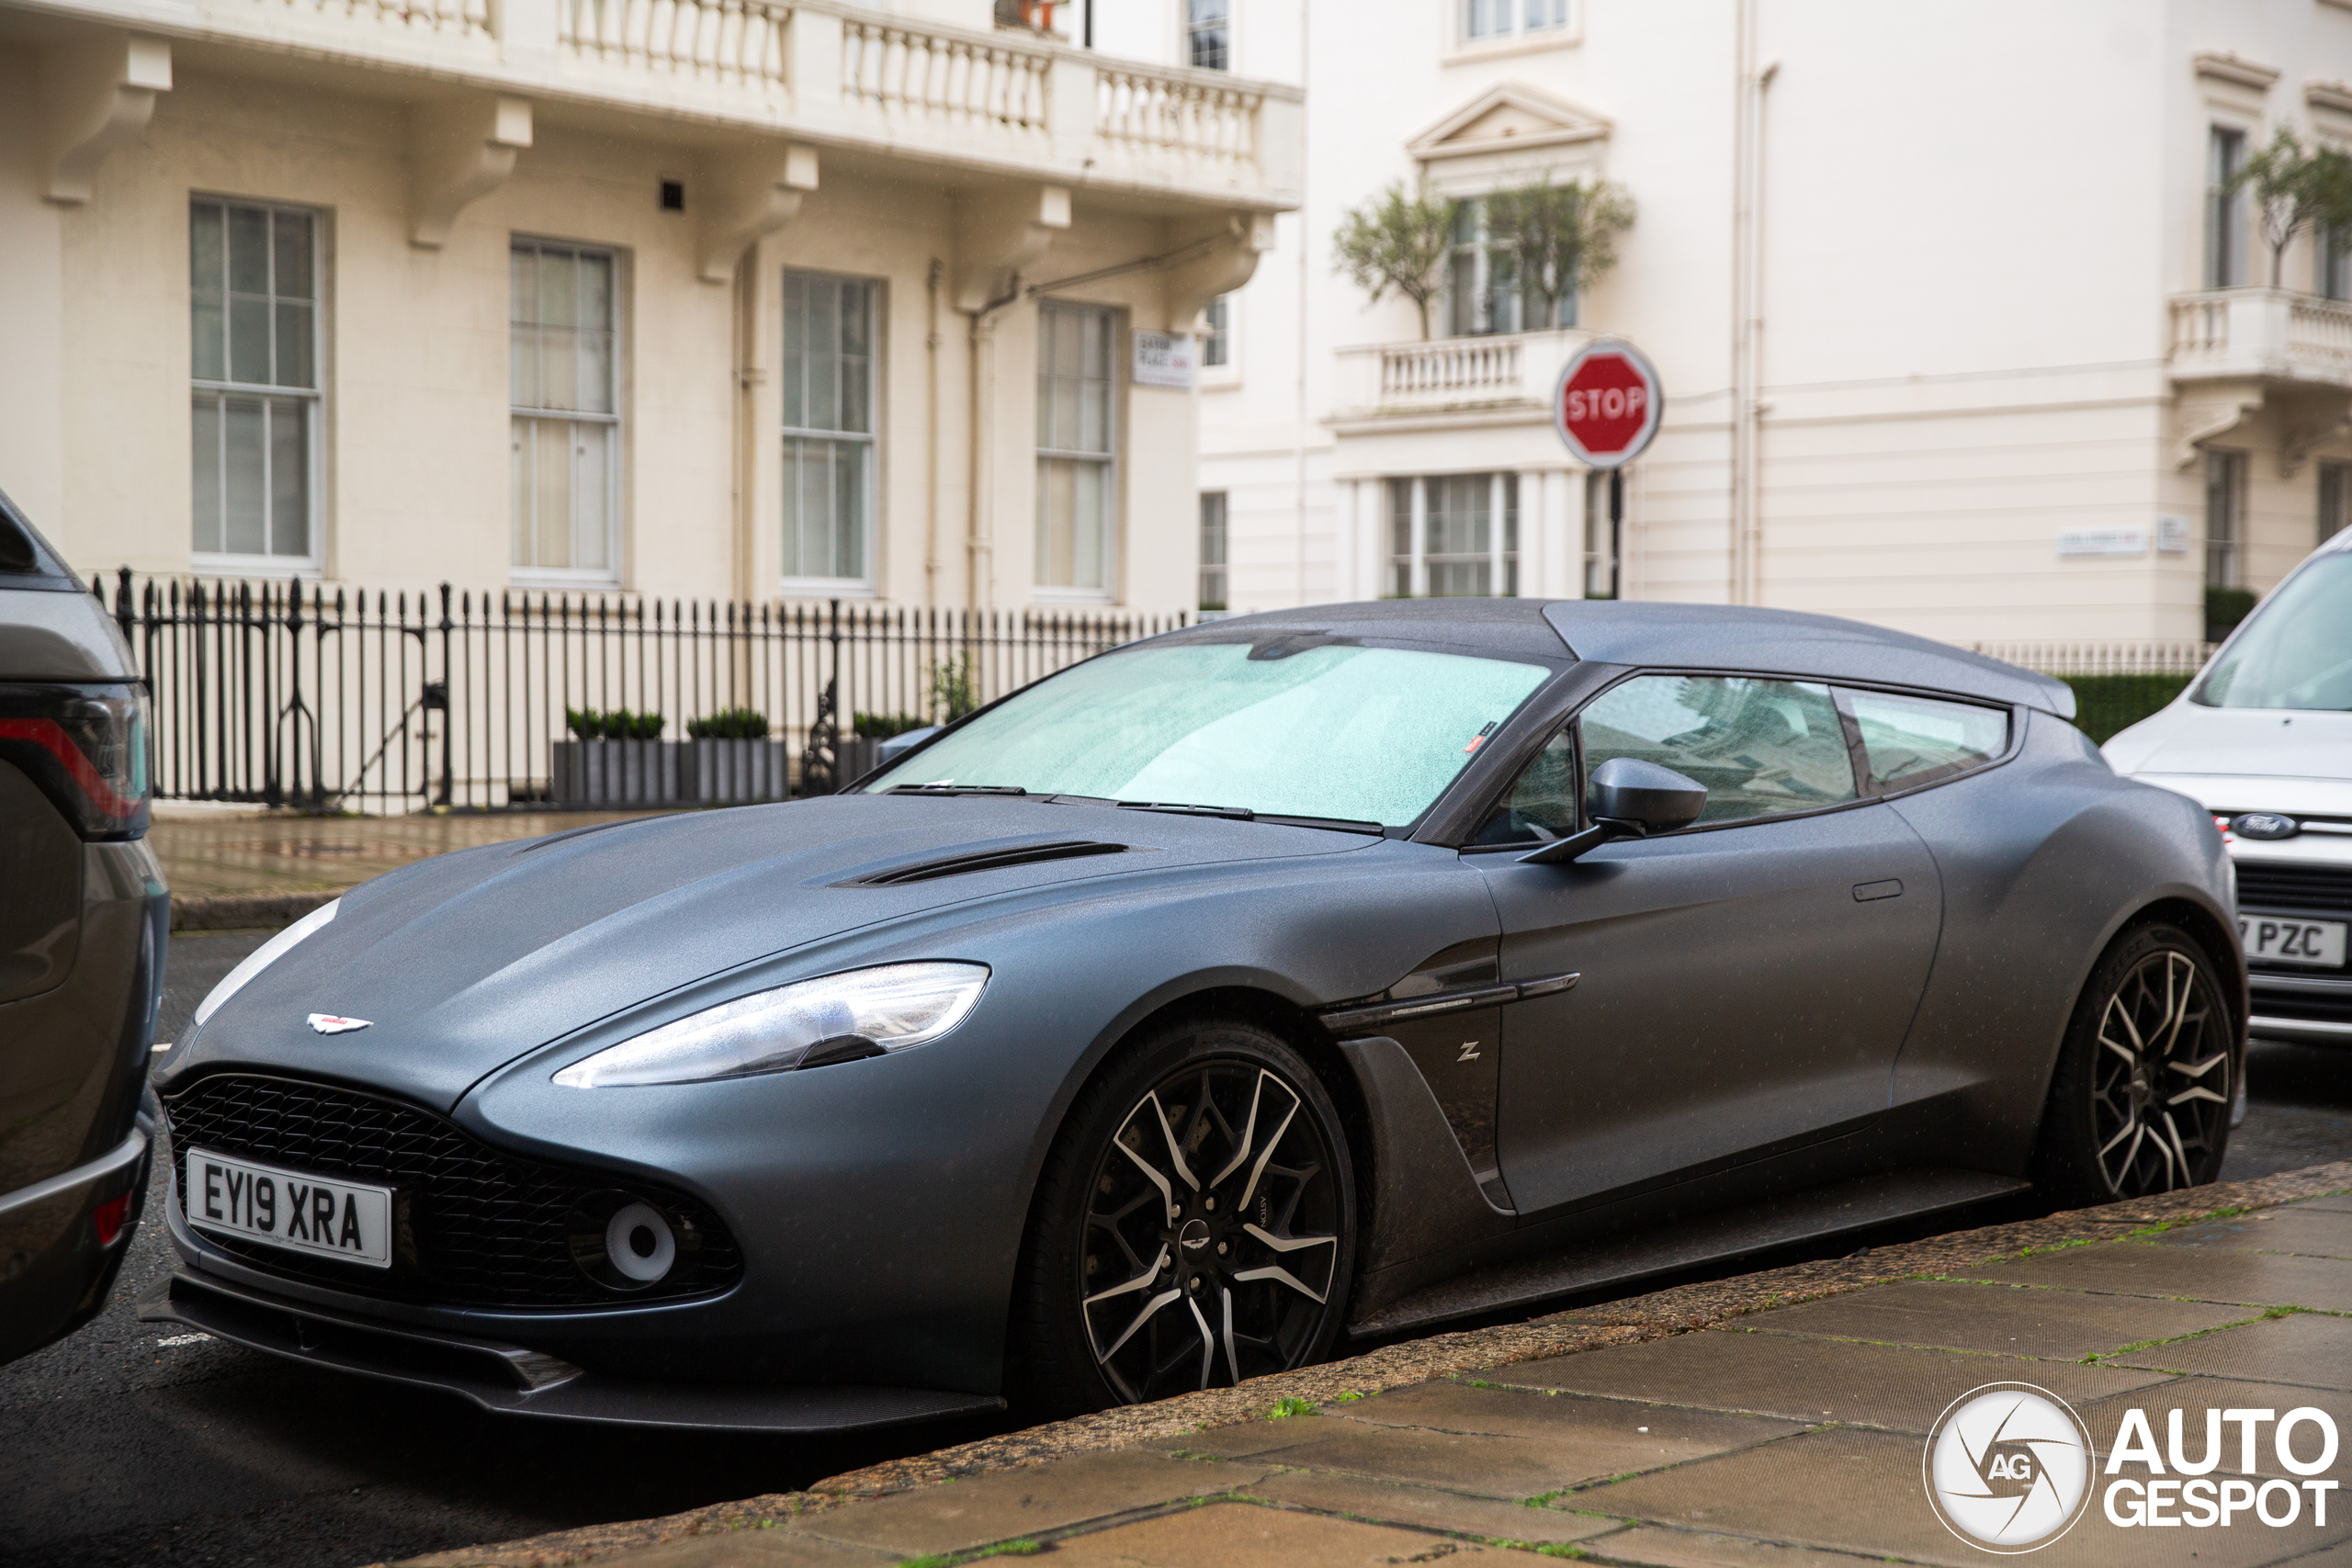 The perfect Aston Martin